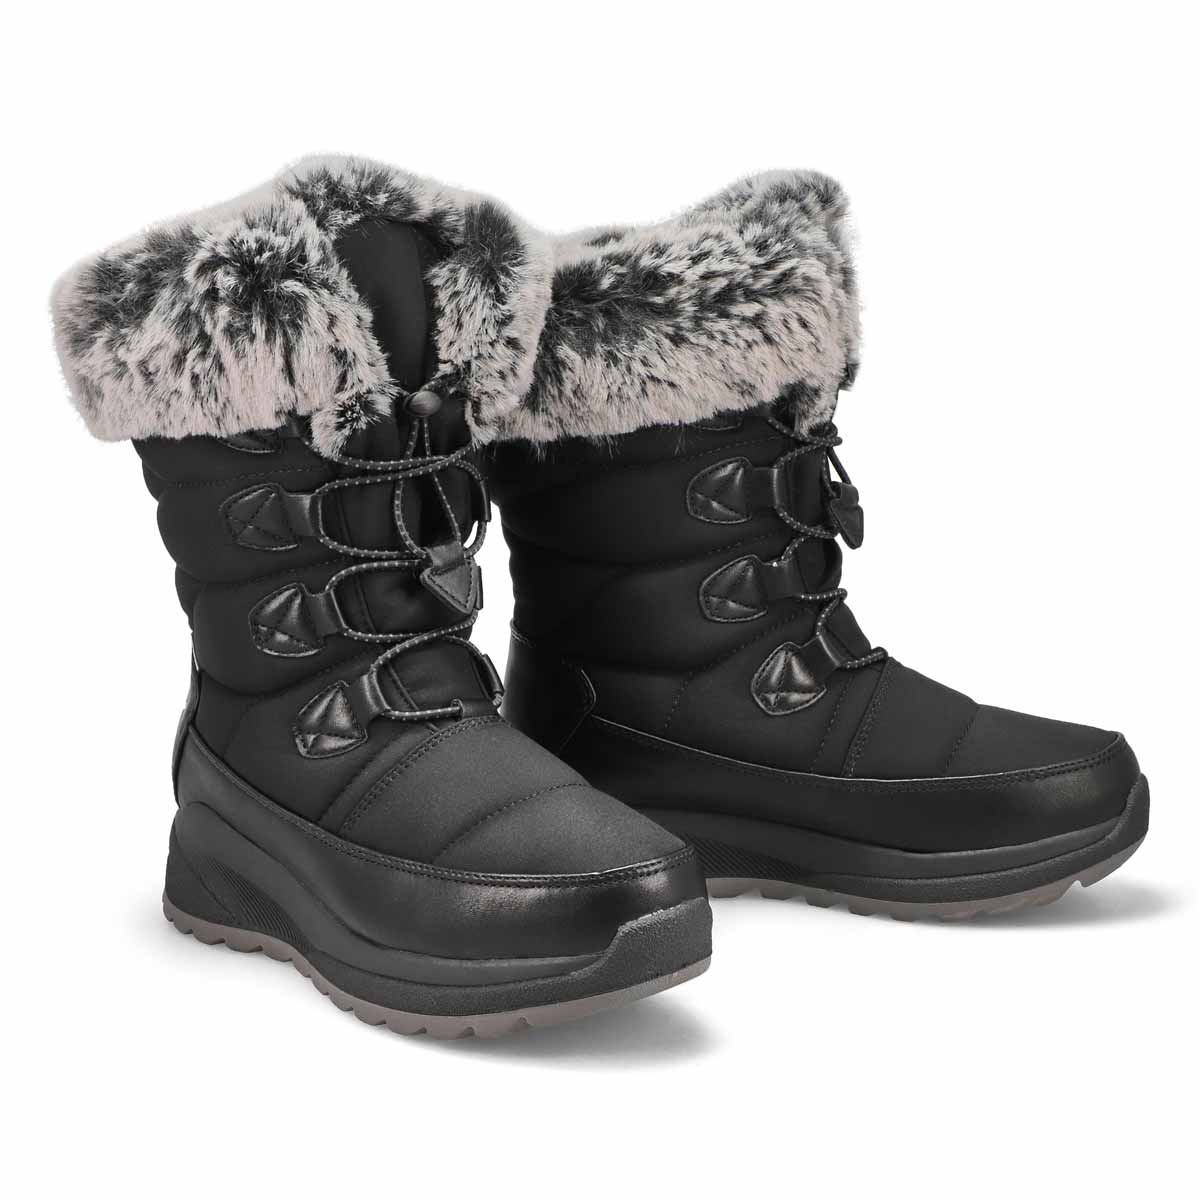 Women's Niobe Waterproof Winter Boot - Black